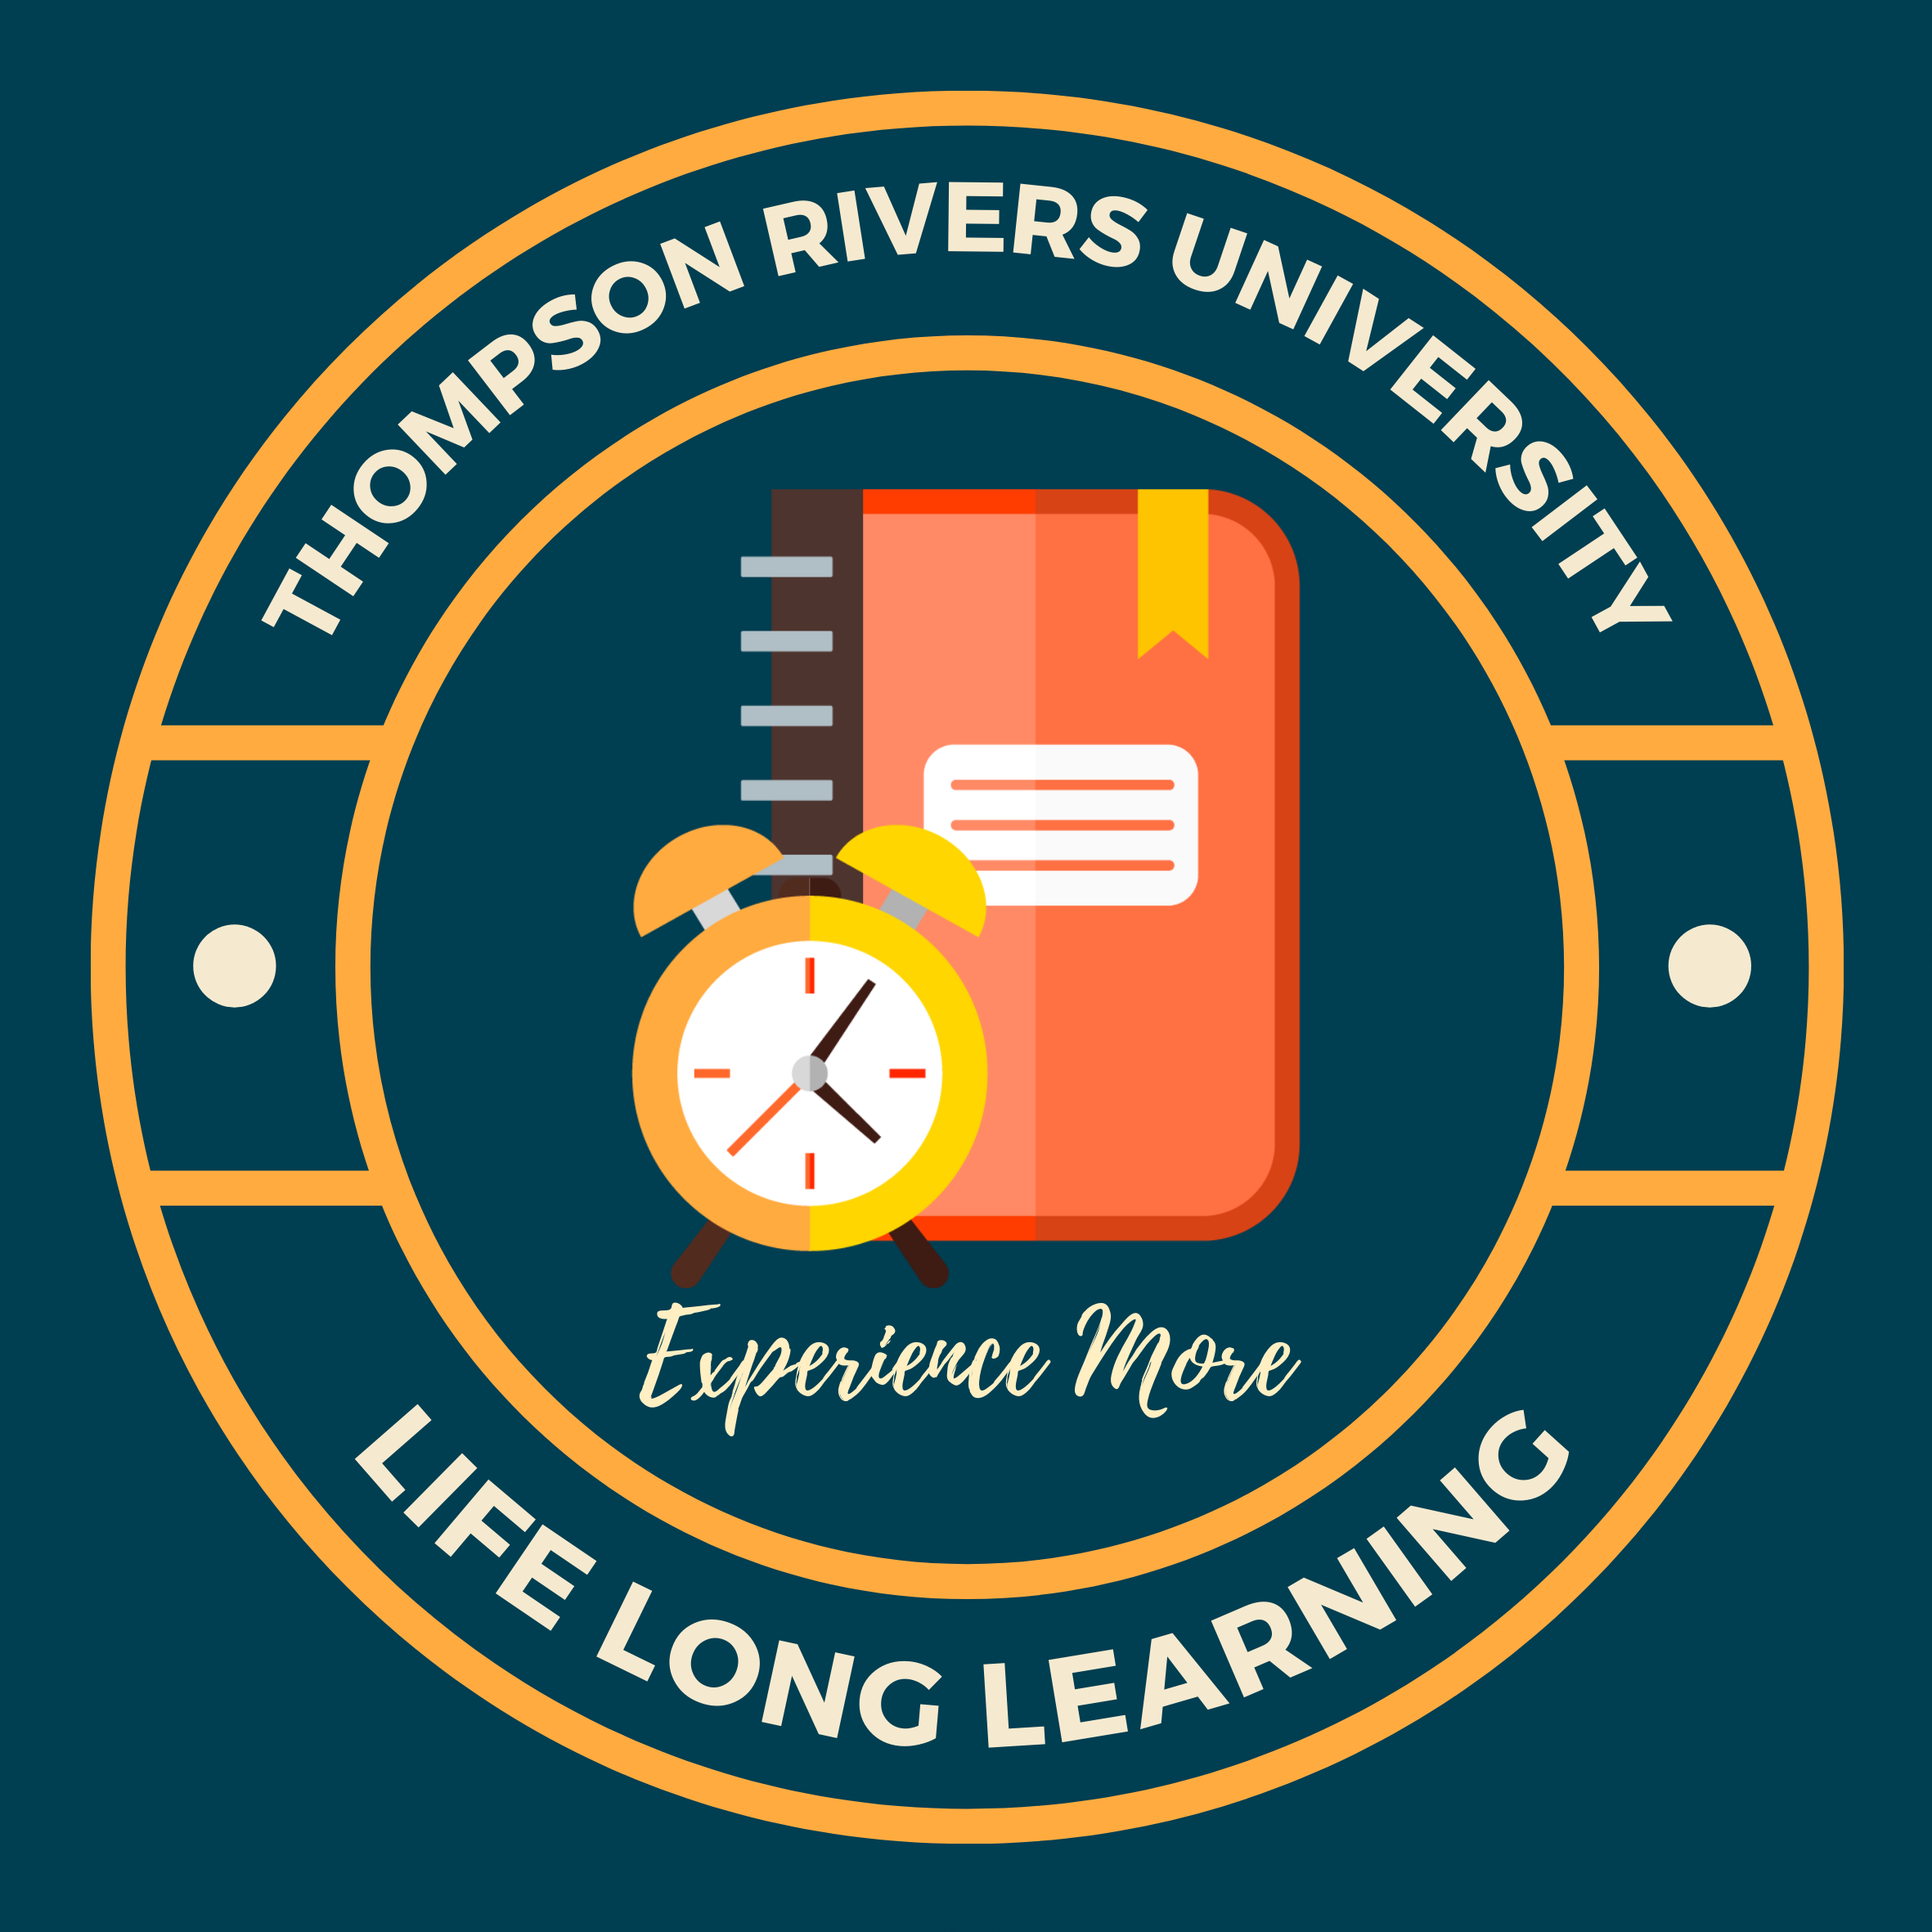 Life Long Learning Badge